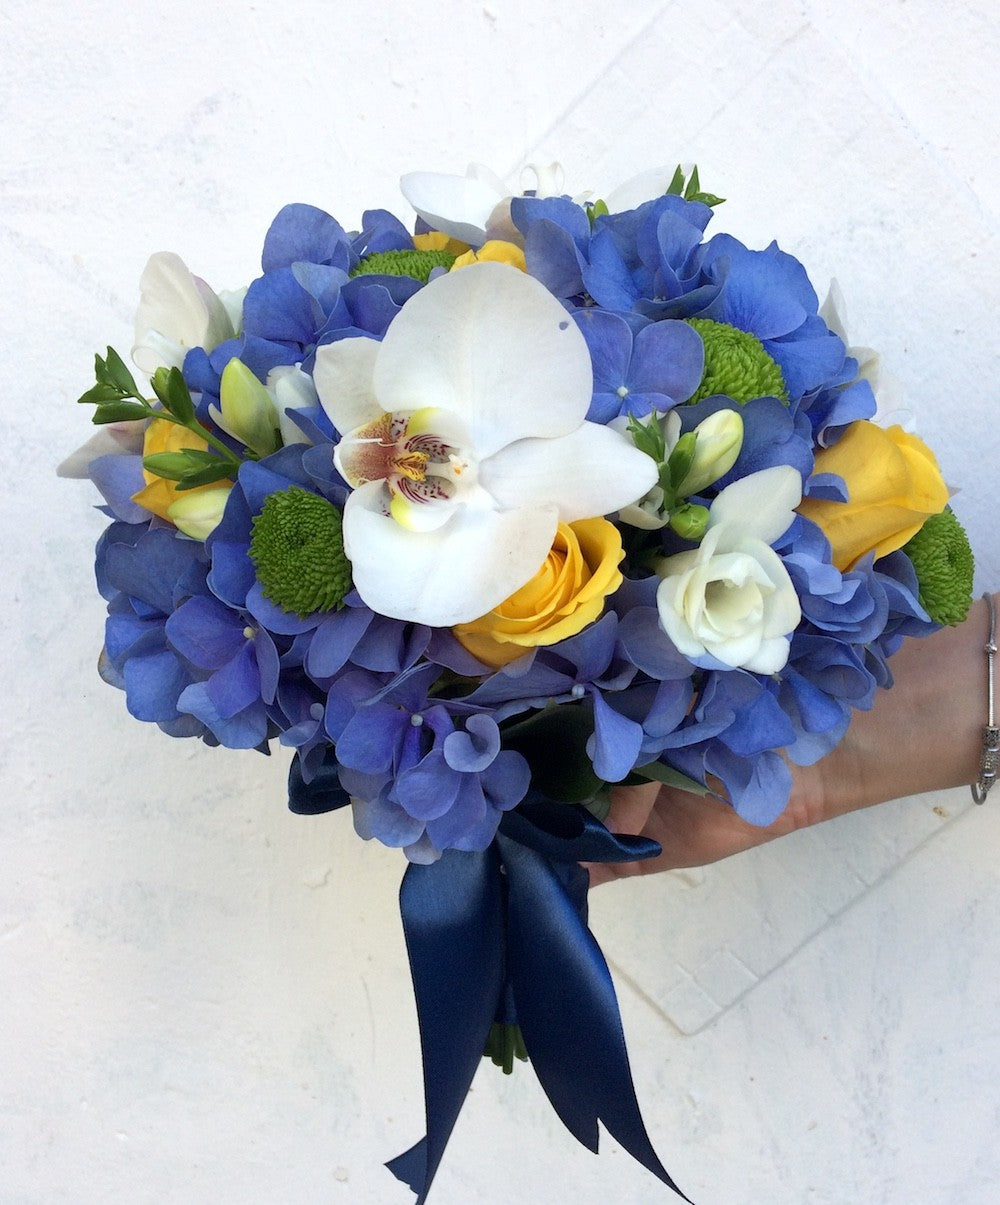 Buchet cununie hortensie albastra, frezii si orhidee